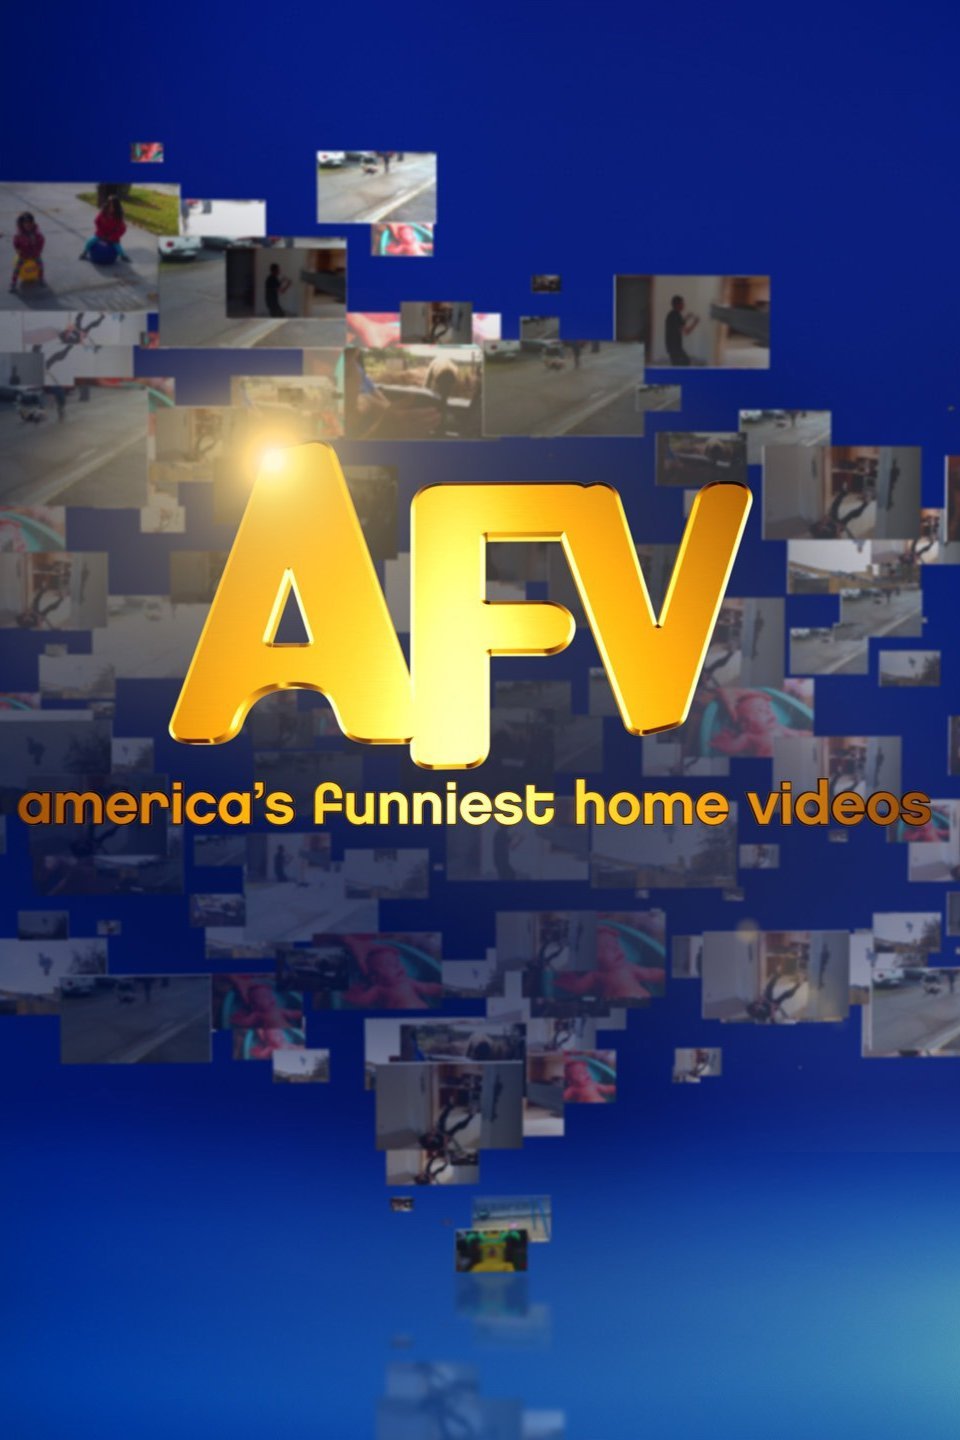 America's Funniest Home Videos | My scratchpad Wiki | Fandom